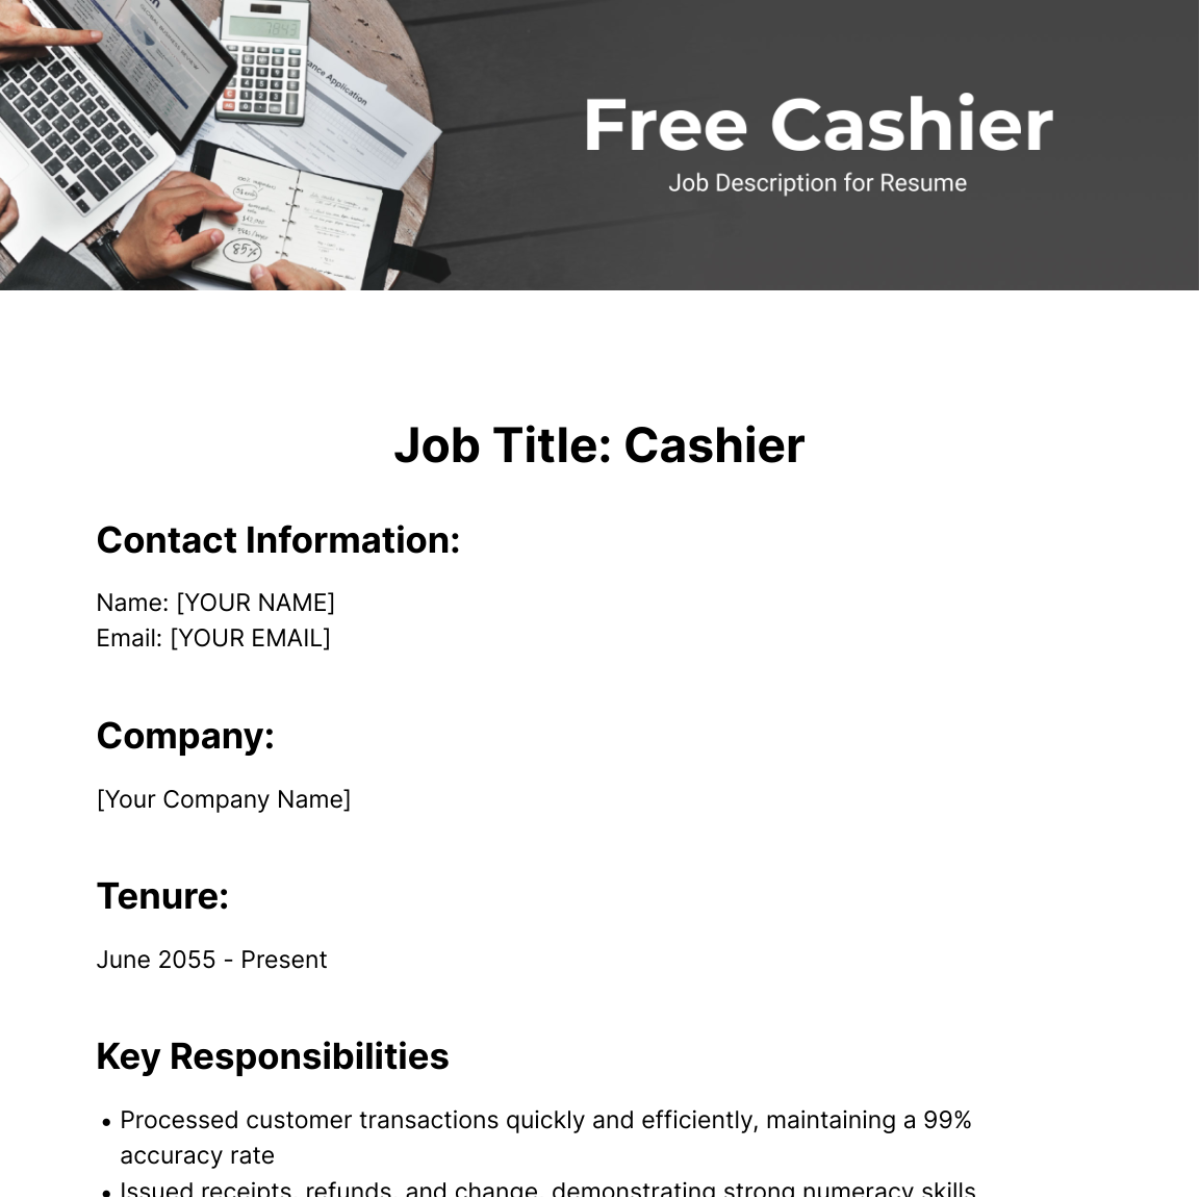 Cashier Job Description for Resume Template